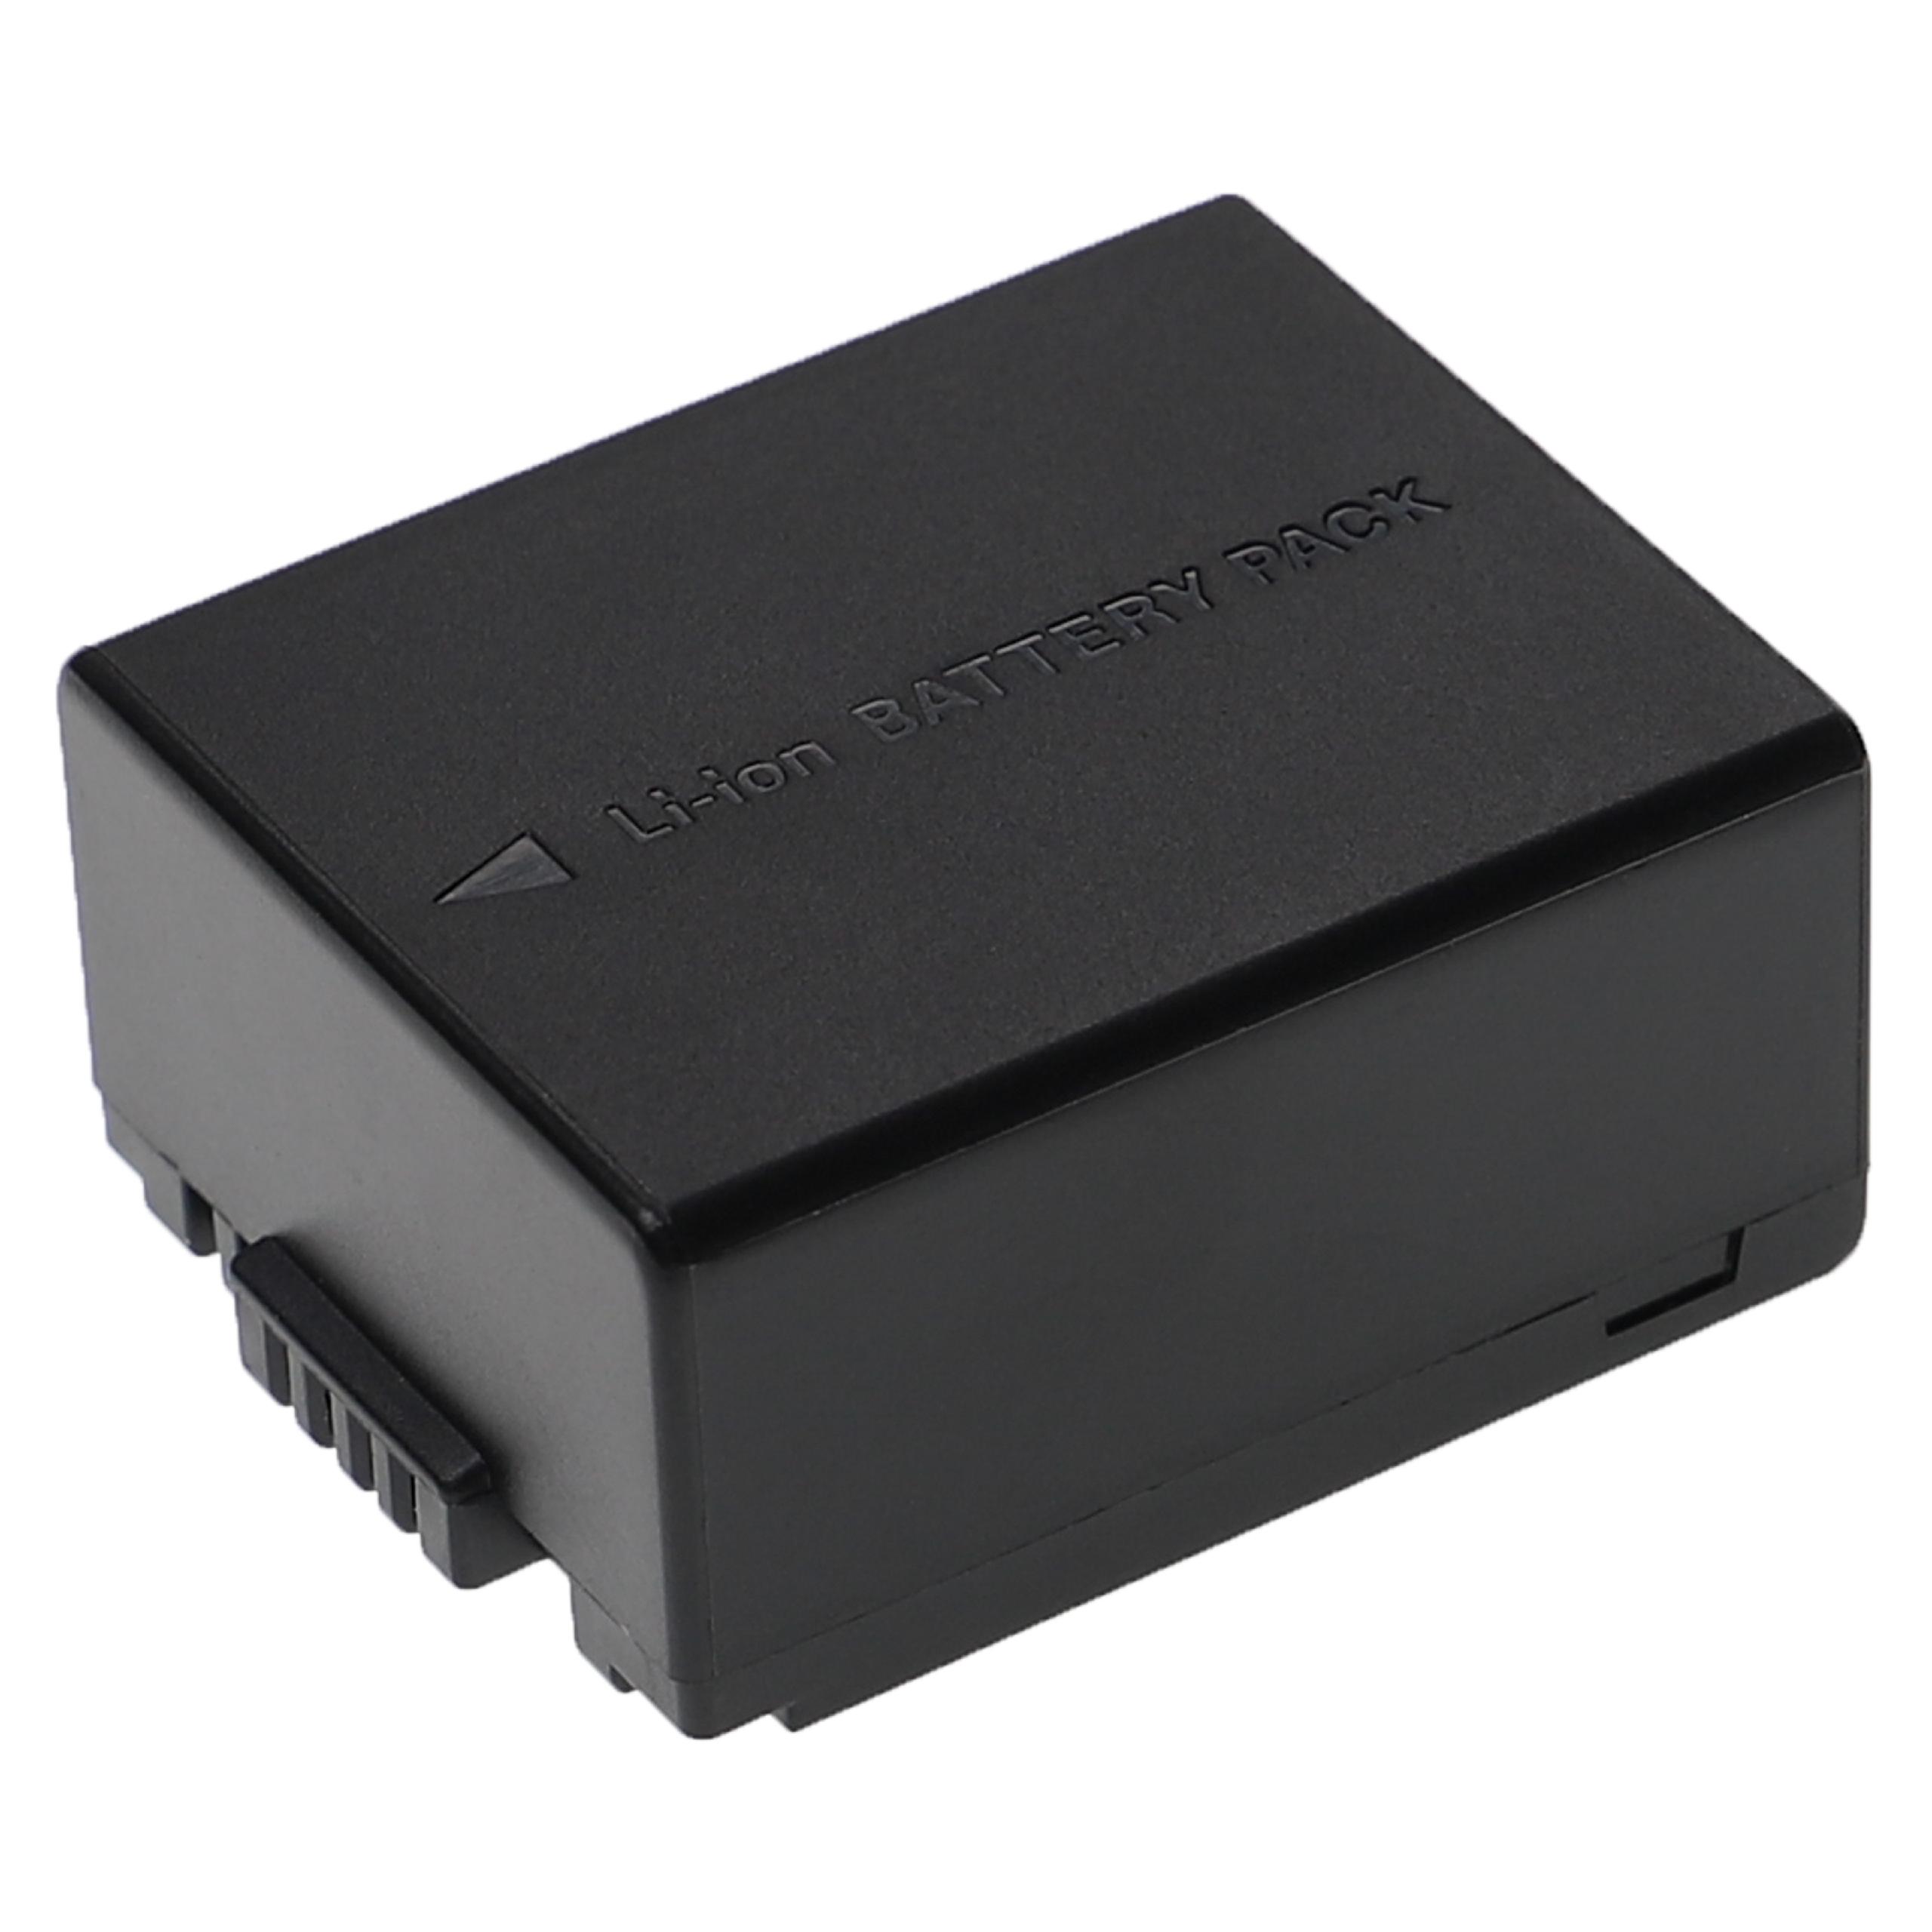 Akumulator do aparatu cyfrowego zamiennik Panasonic DMW-BLB13, DMW-BLB13E, DMW-BLB13GK - 1250 mAh 7,4 V Li-Ion